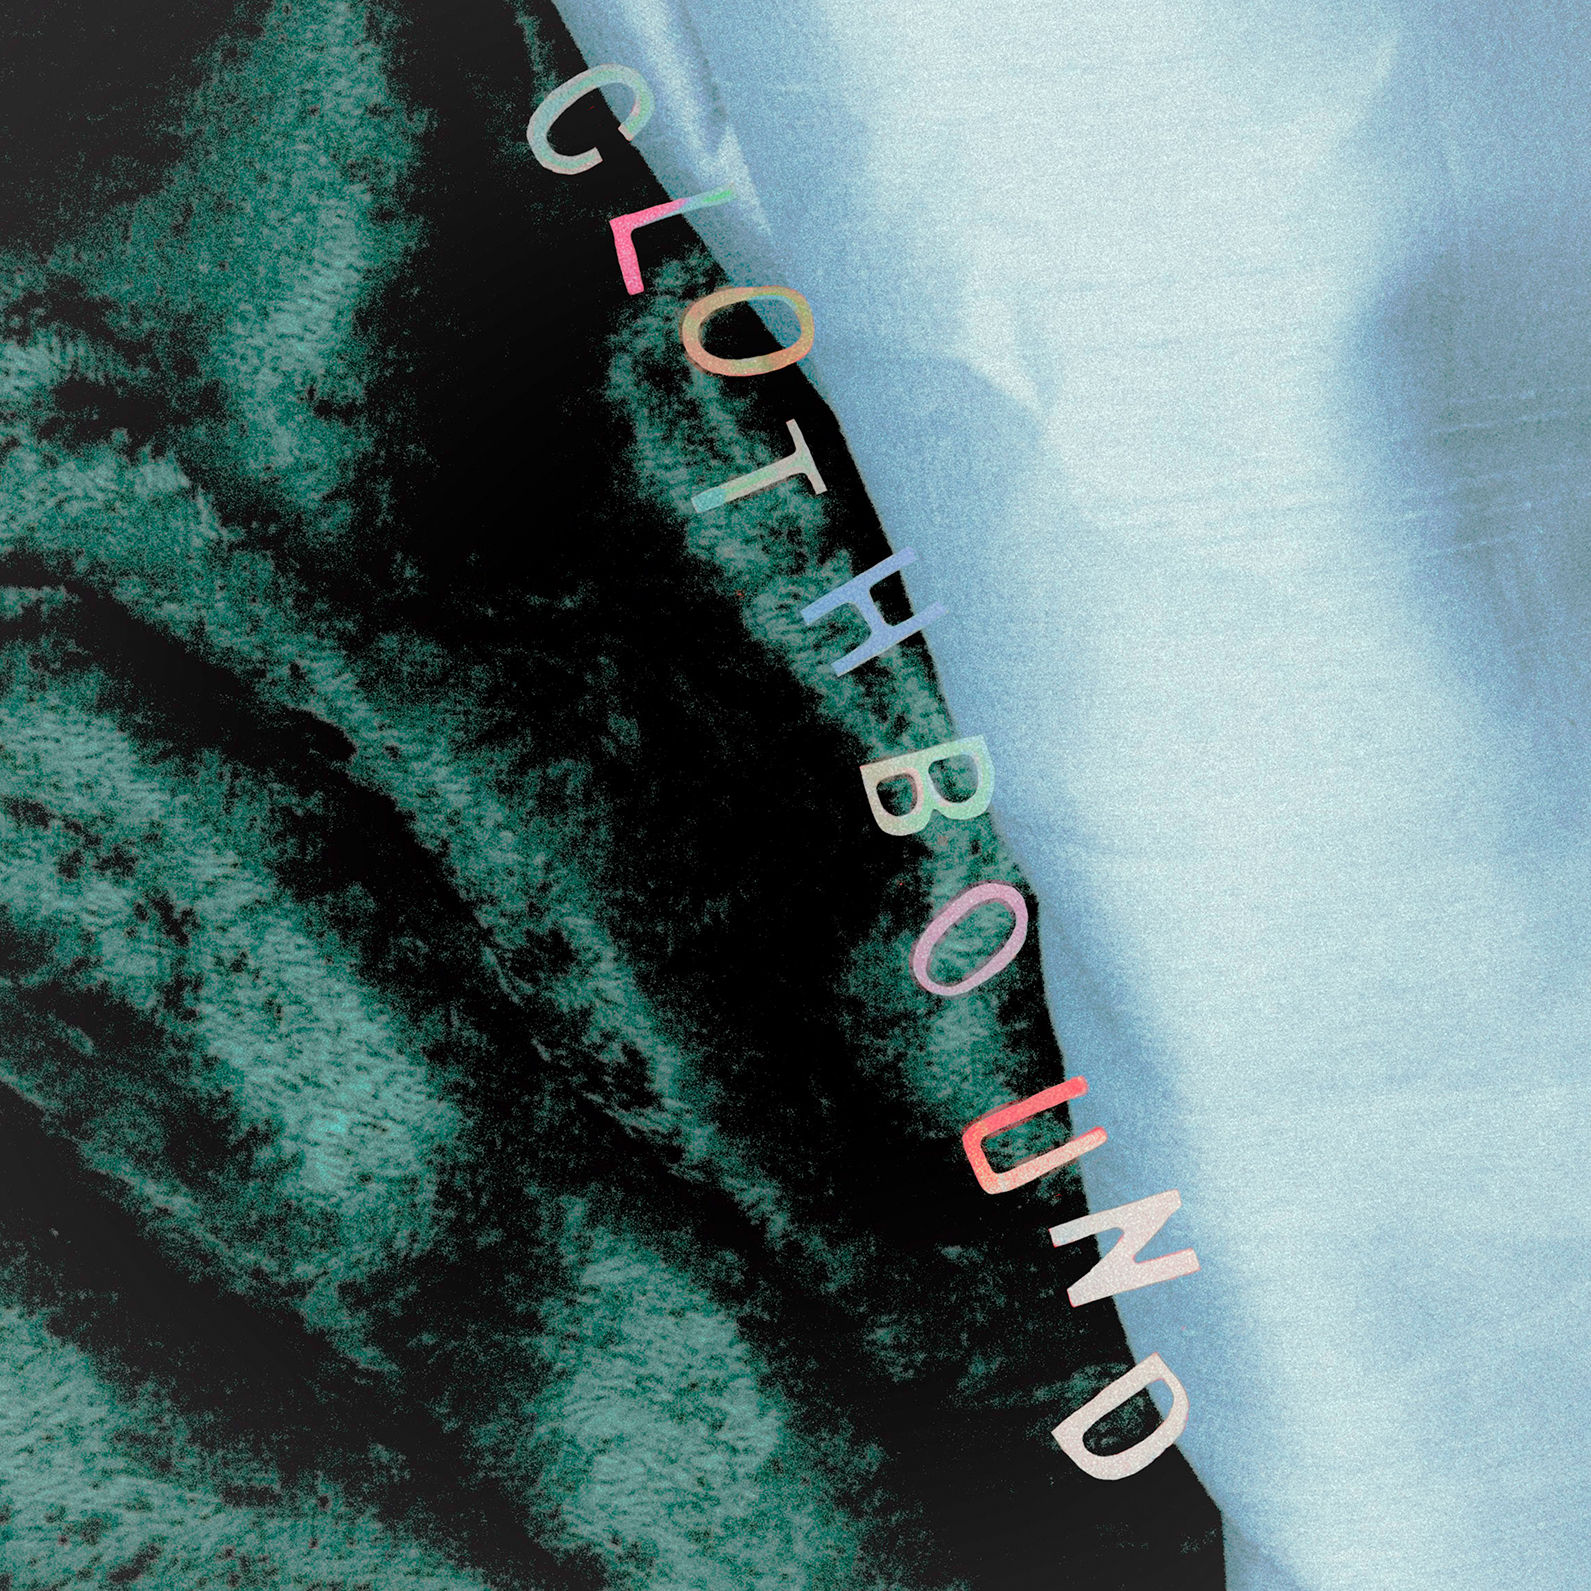 ALBUM REVIEW: The Sonder Bombs - Clothbound 